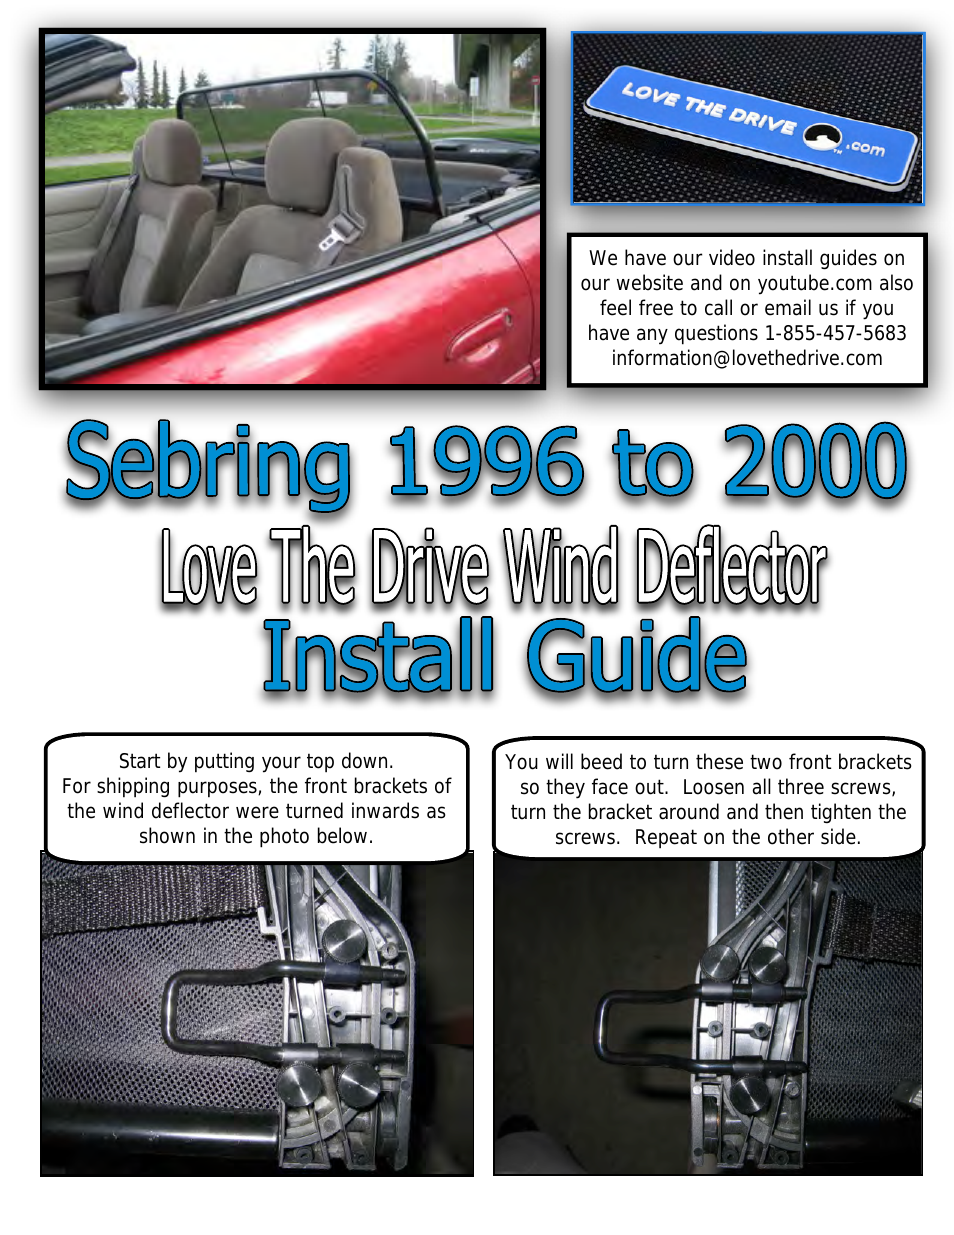 Sebring Wind Deflector 1996 to 2000